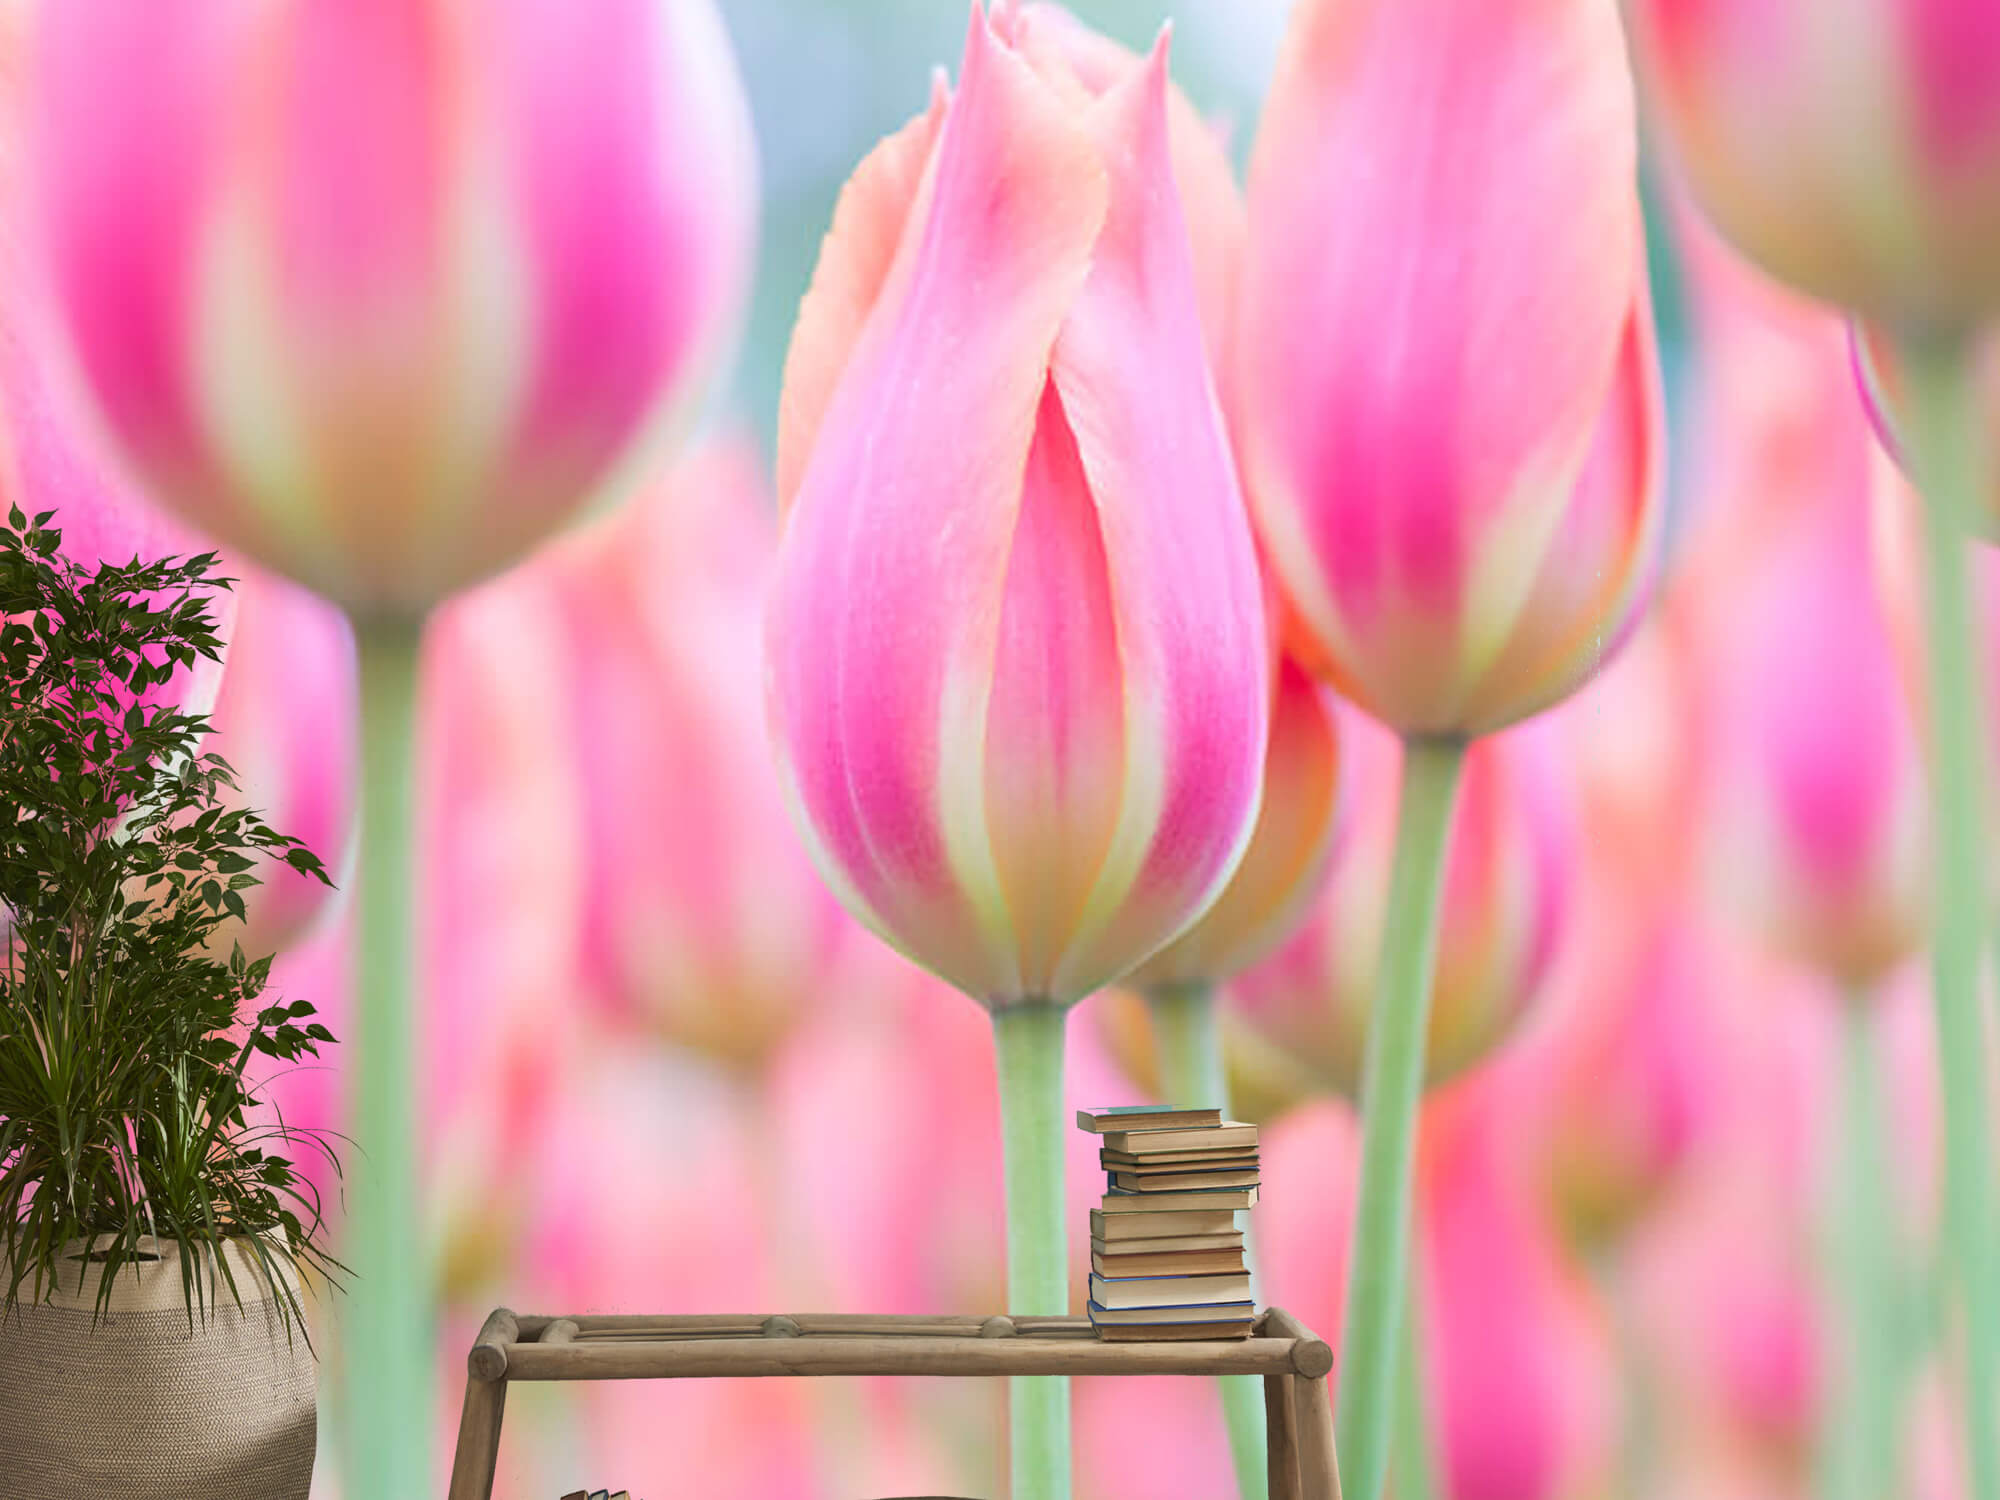  Close-up pink tulips 15